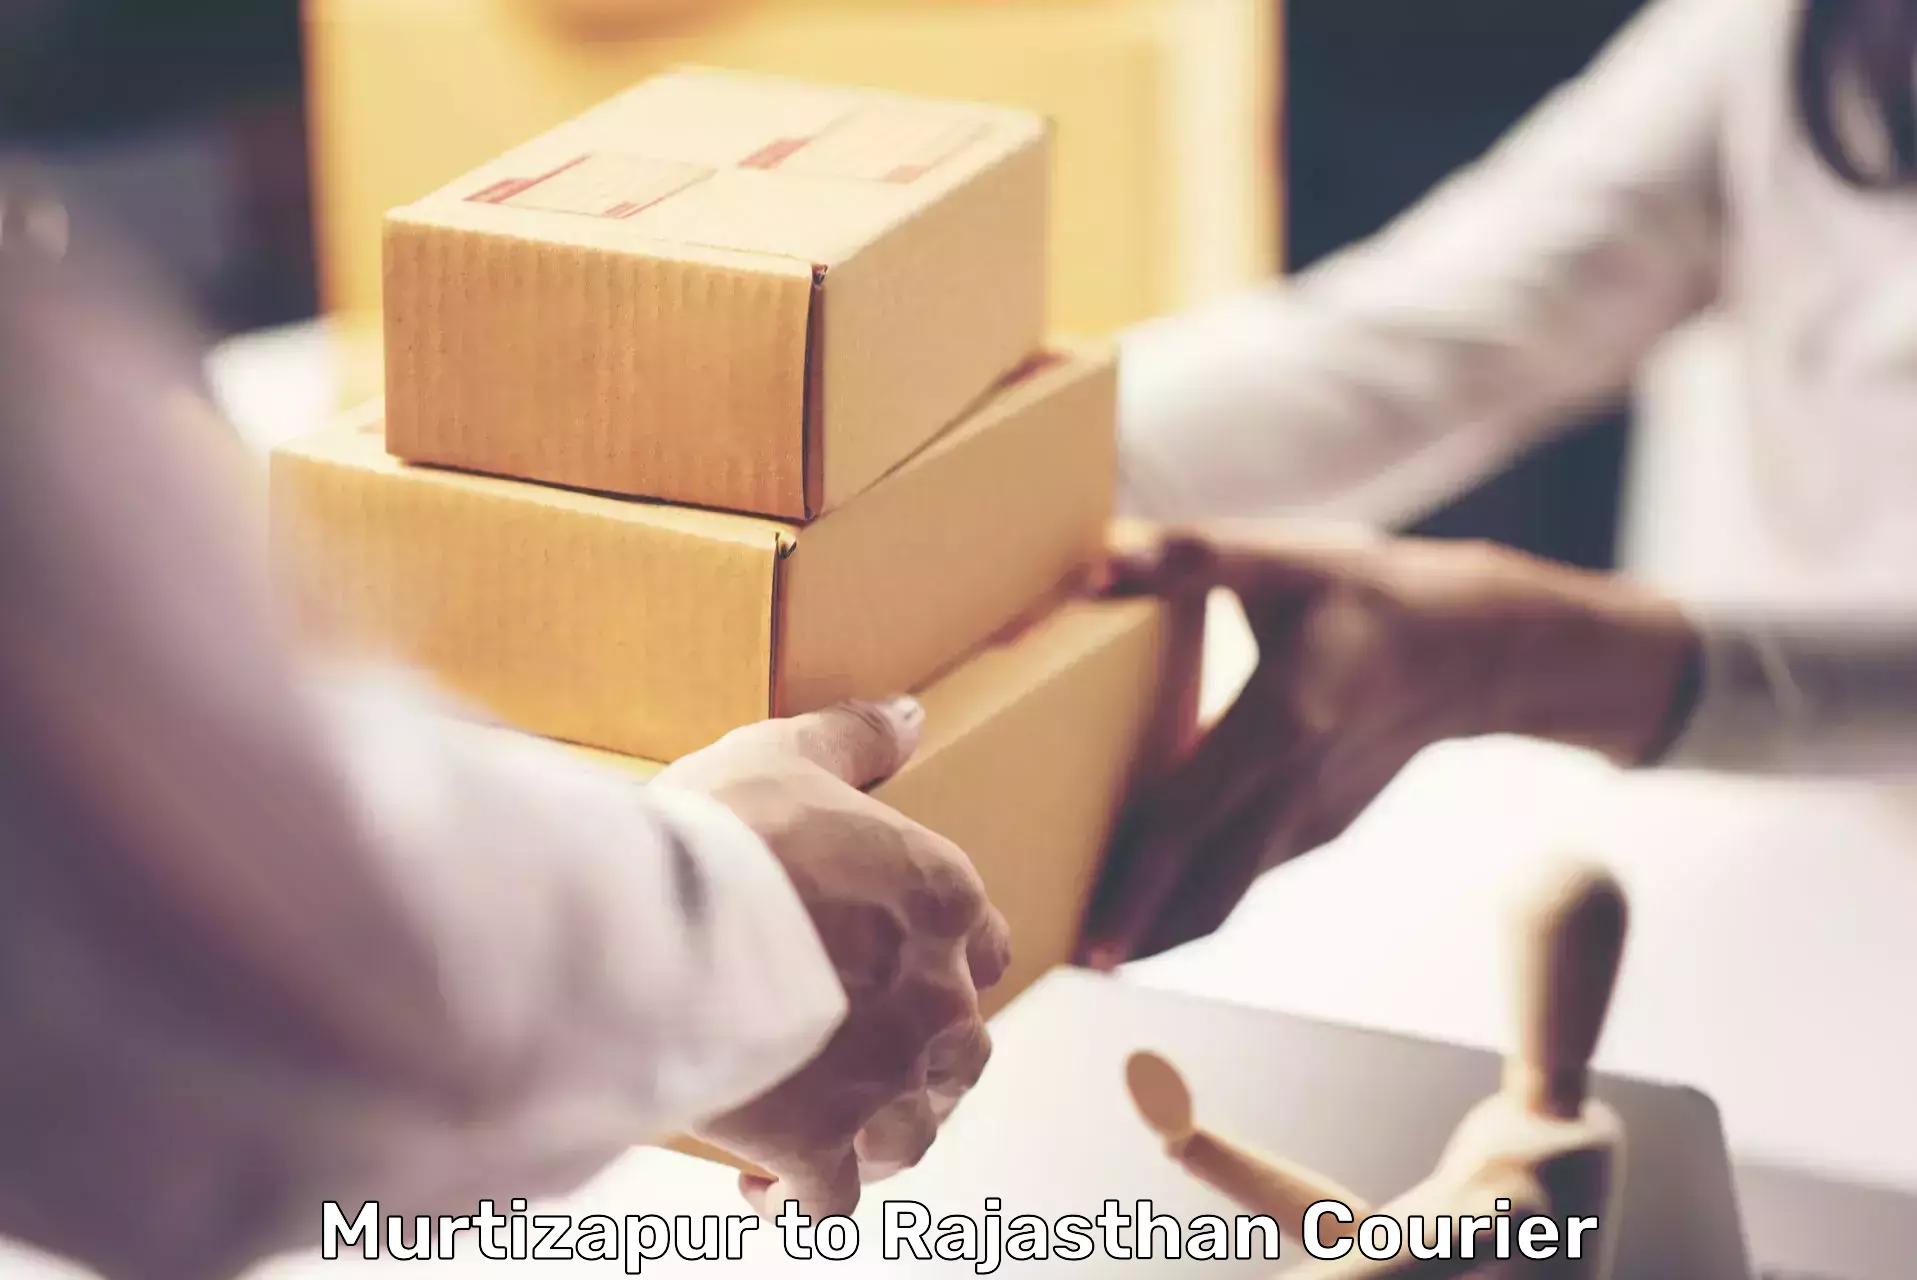 Reliable delivery network Murtizapur to Kotputli